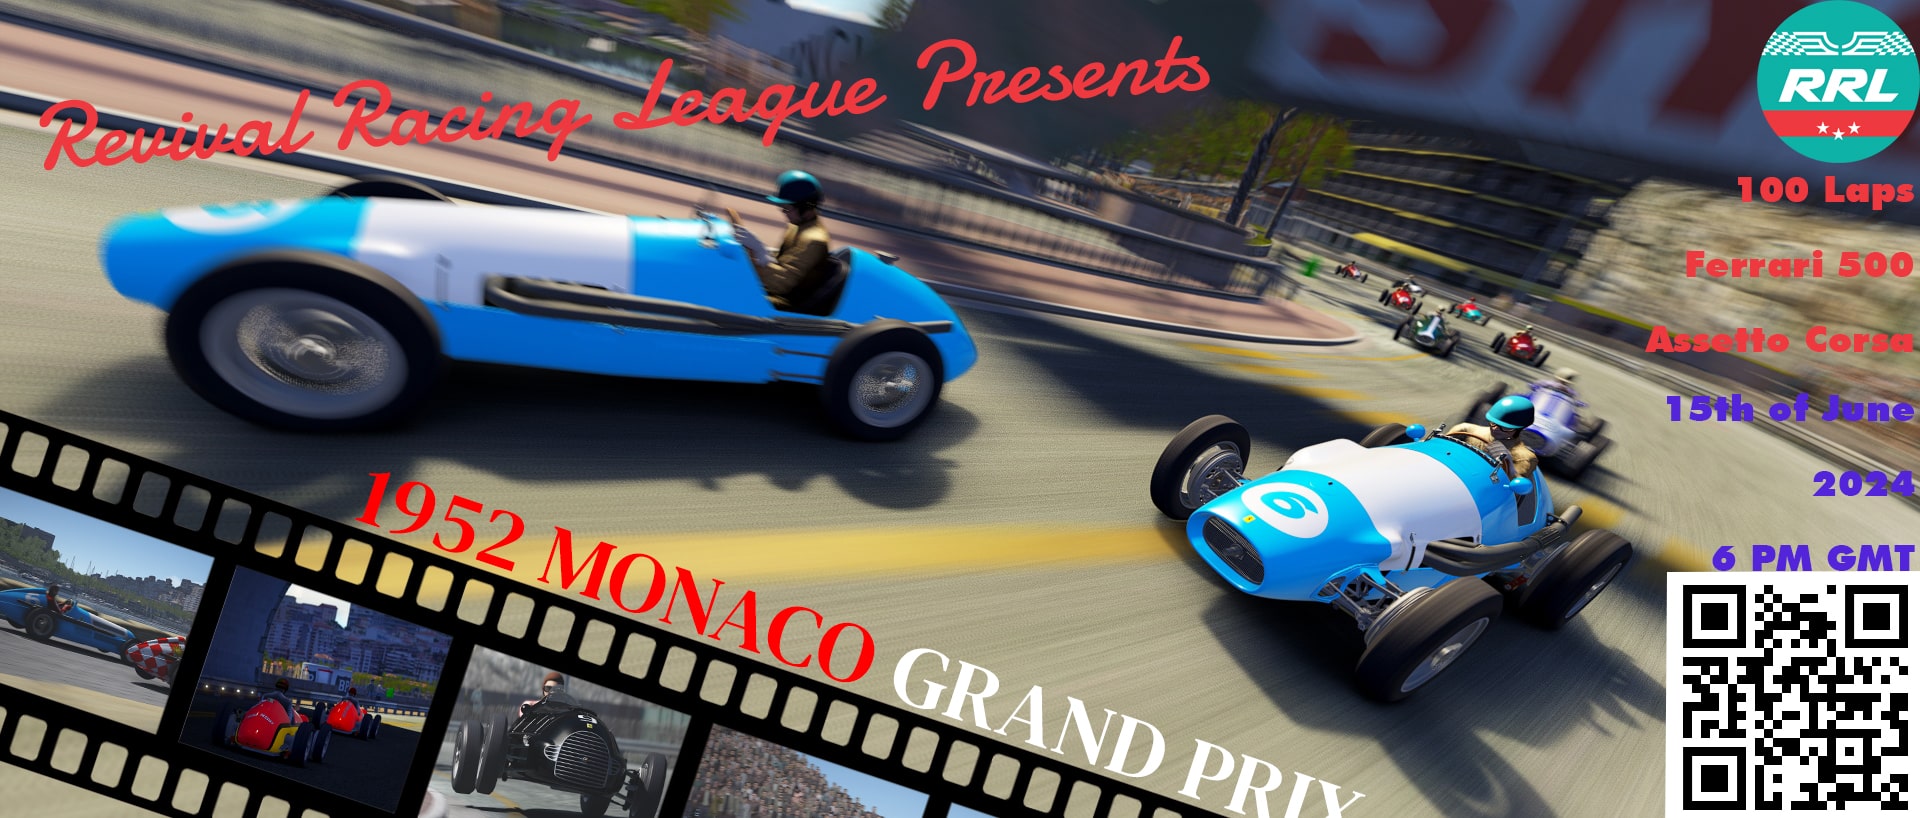 Monaco 1952 Poster-min.jpg